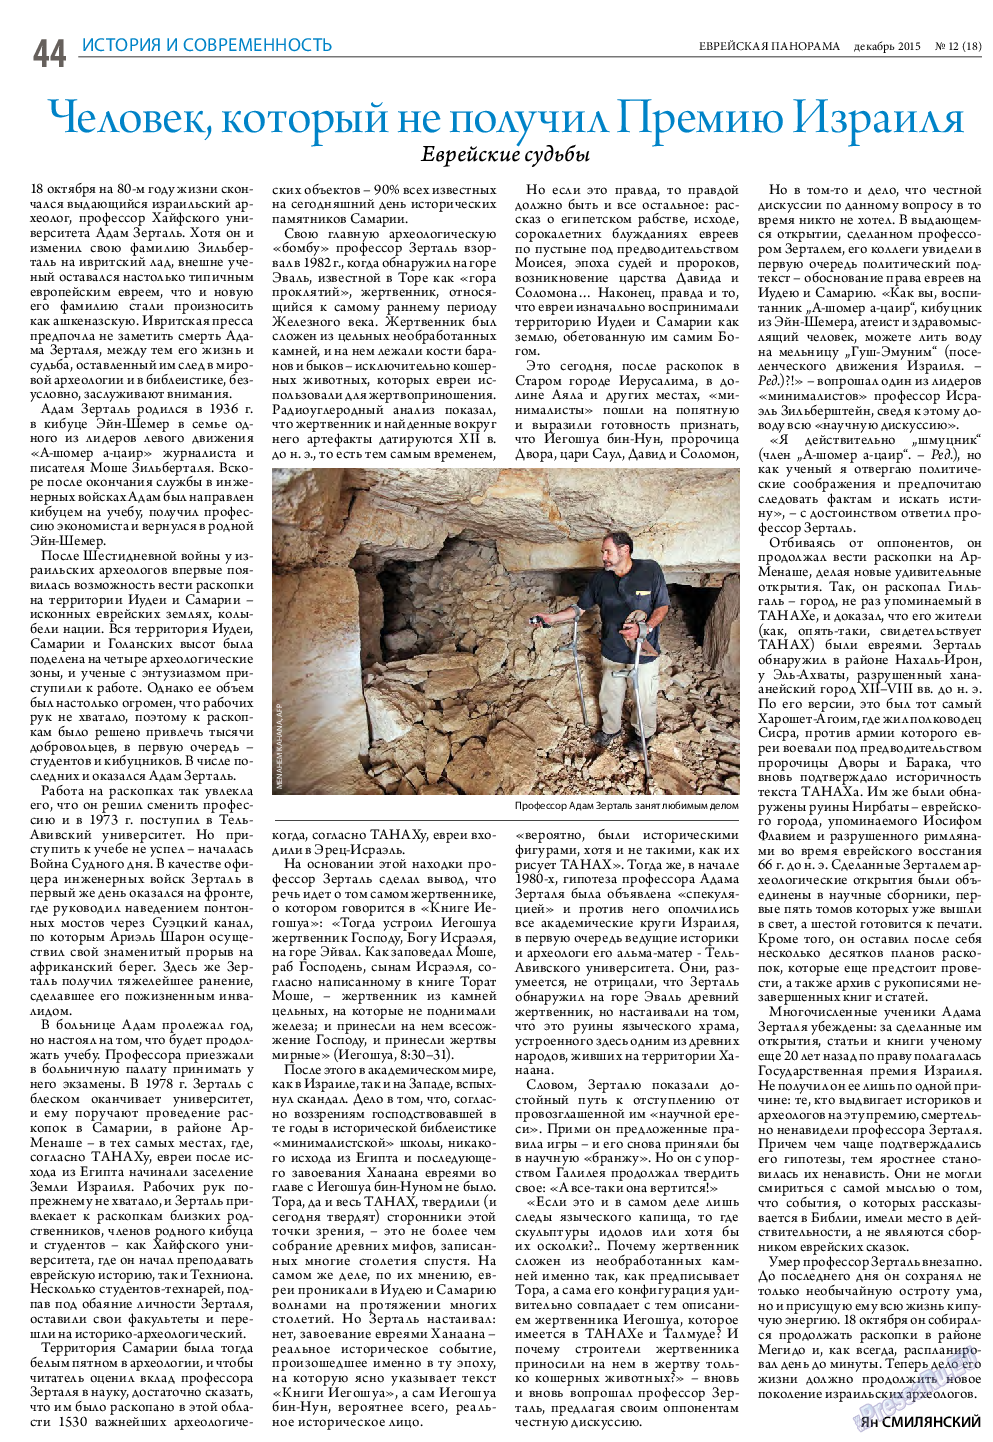 Еврейская панорама, газета. 2015 №12 стр.44